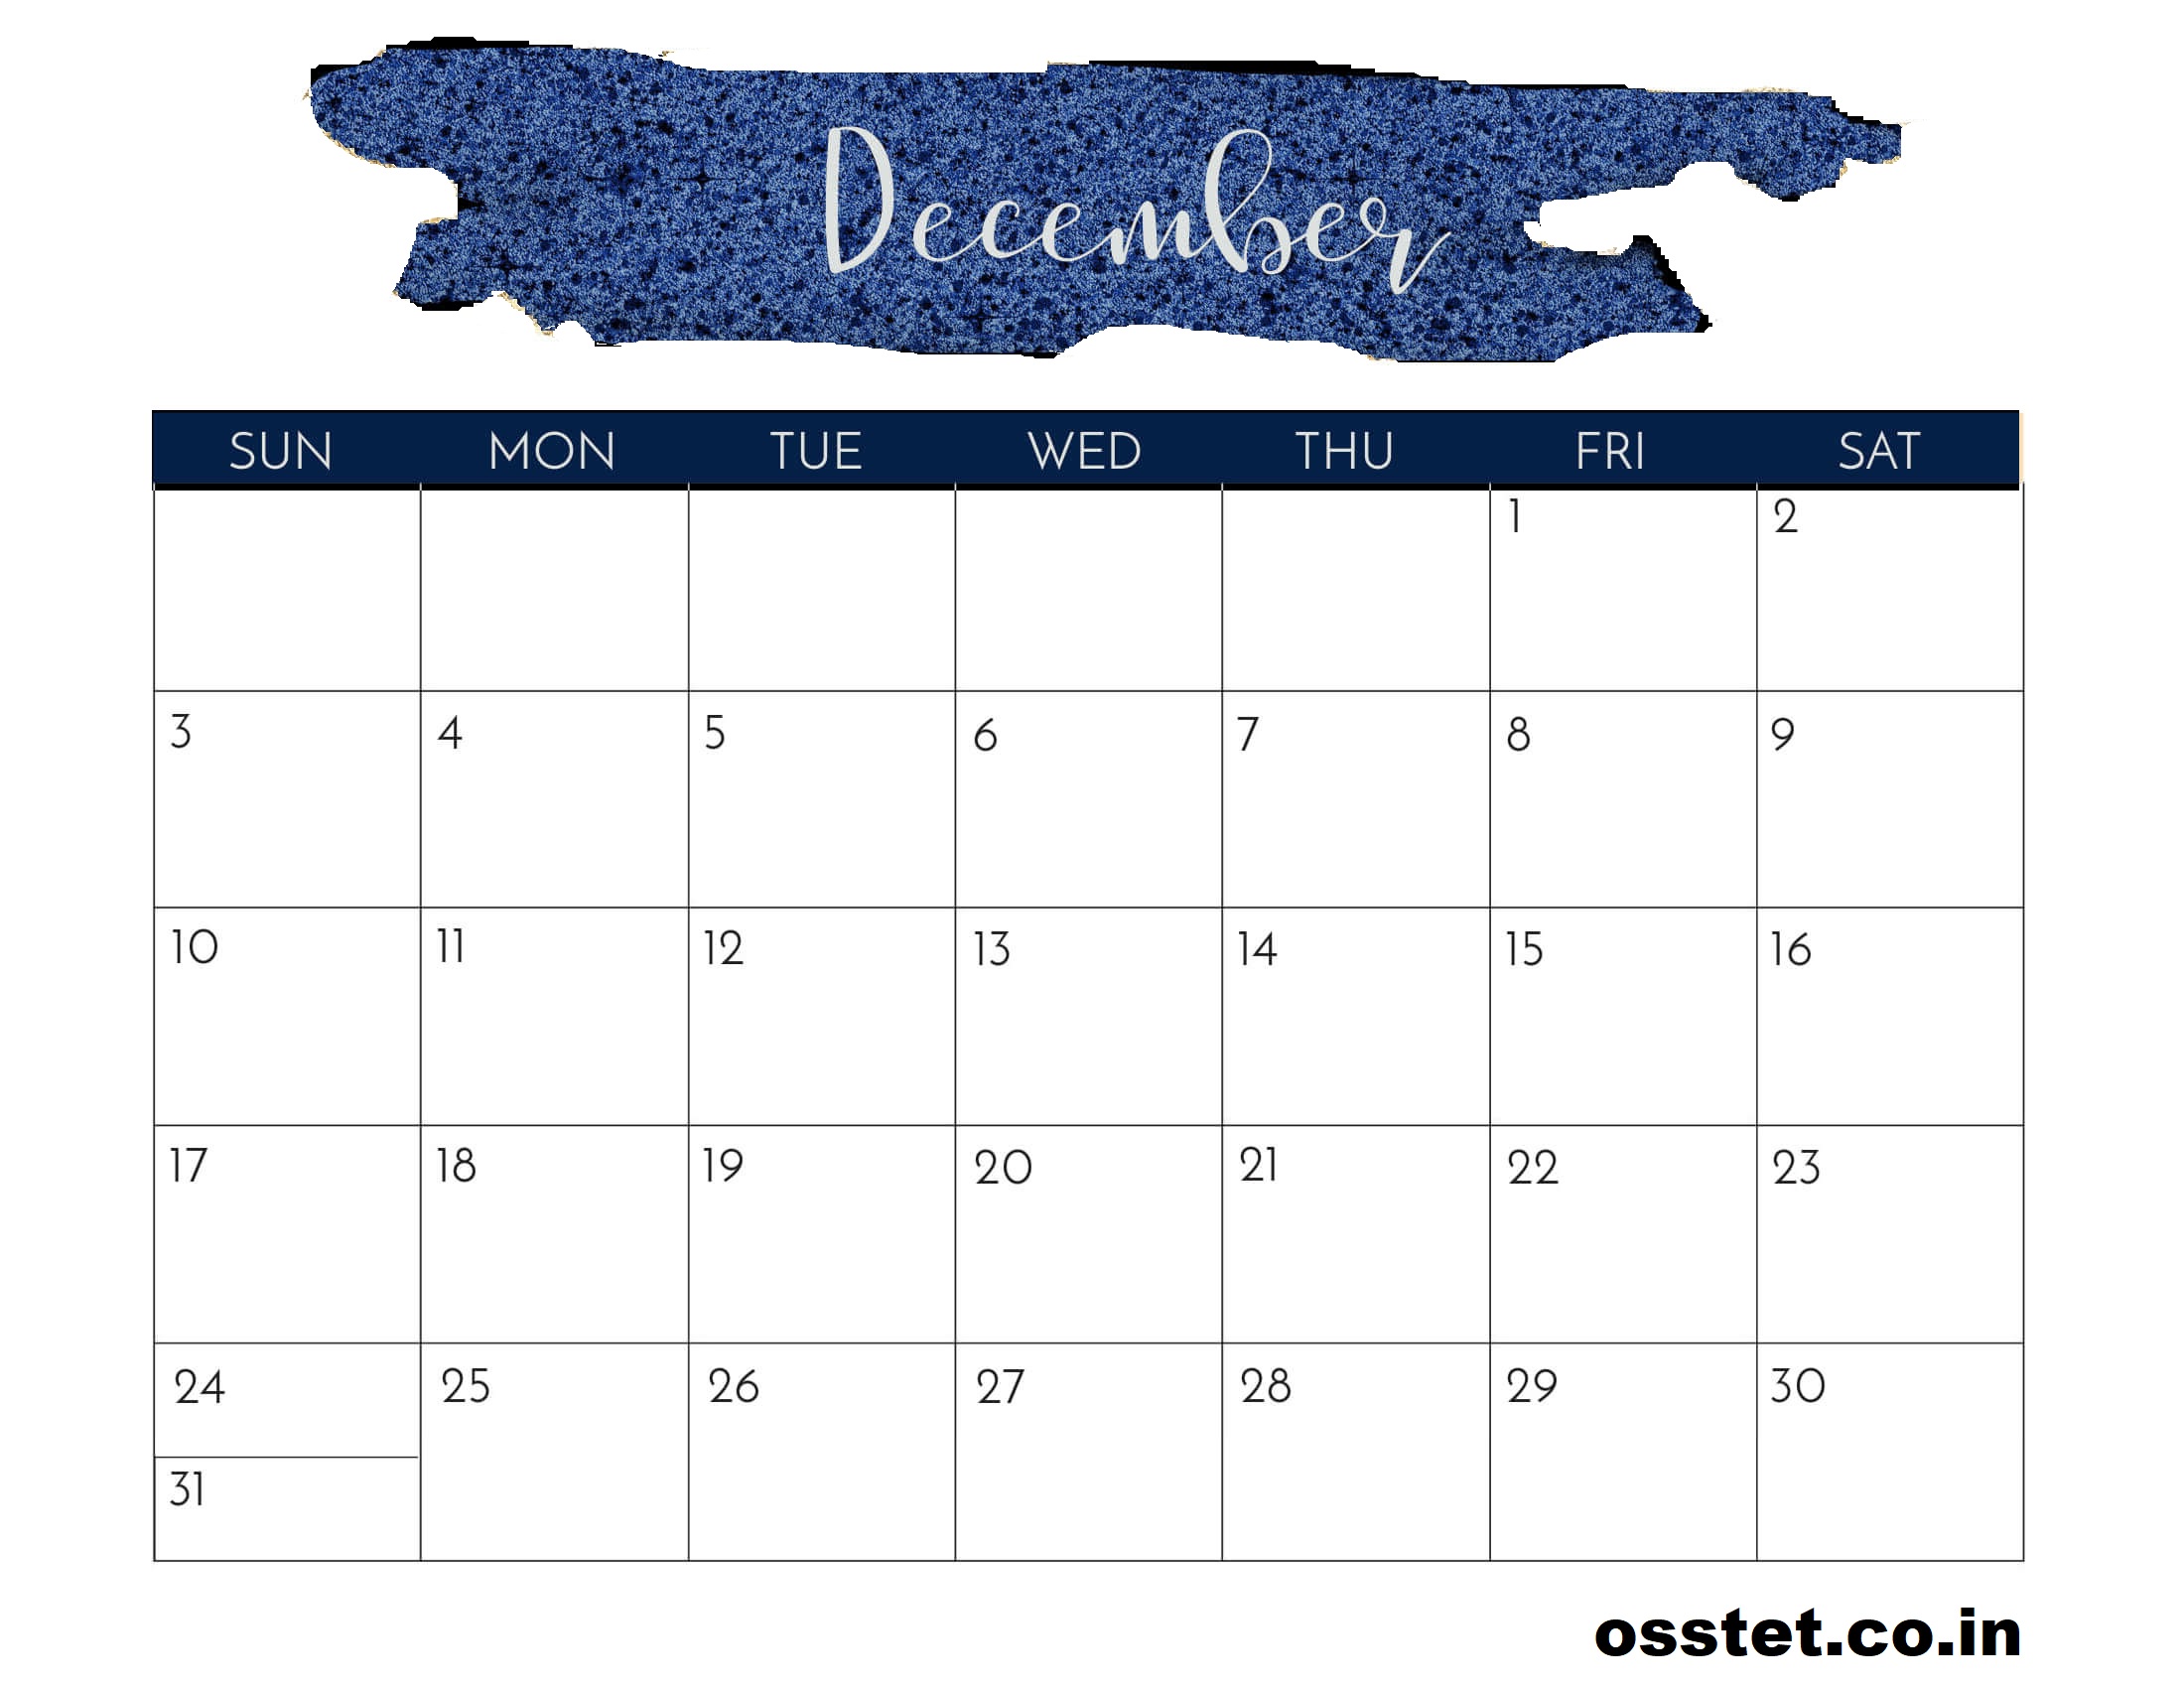 Calendar December 2023